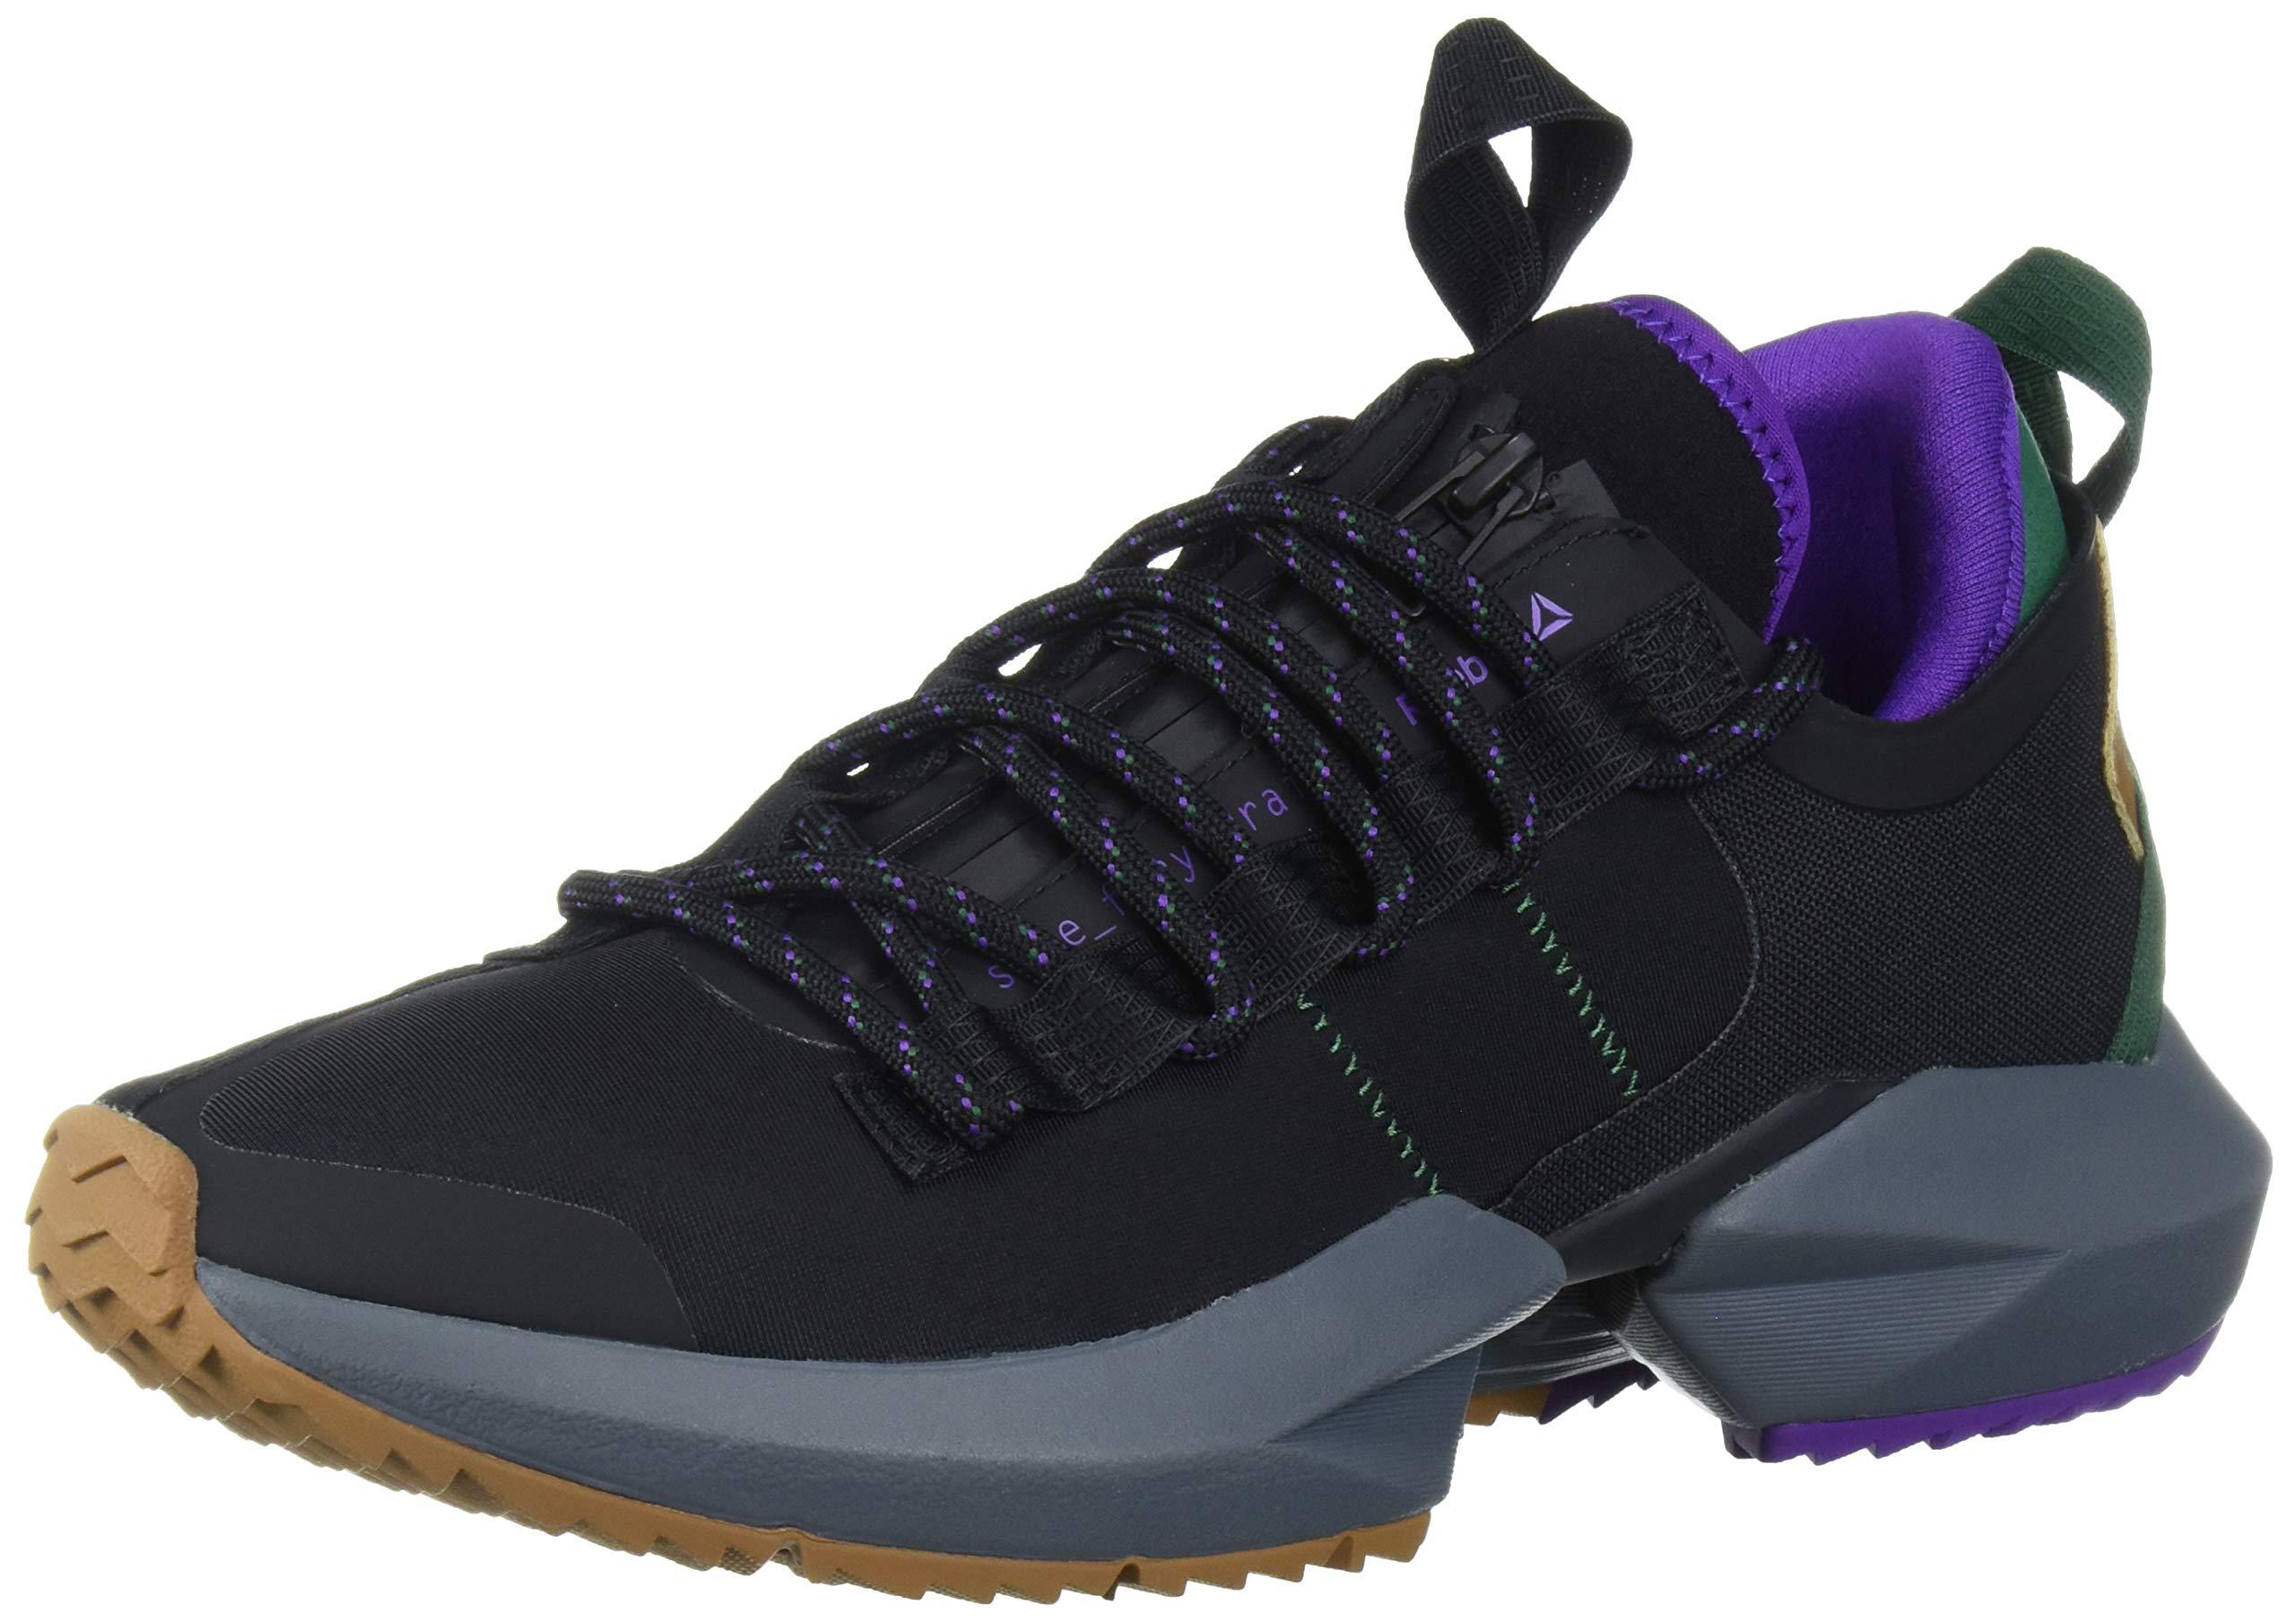 Reebok Neoprene Adult Sole Fury Trail Running Shoe in Black - Save 56% |  Lyst